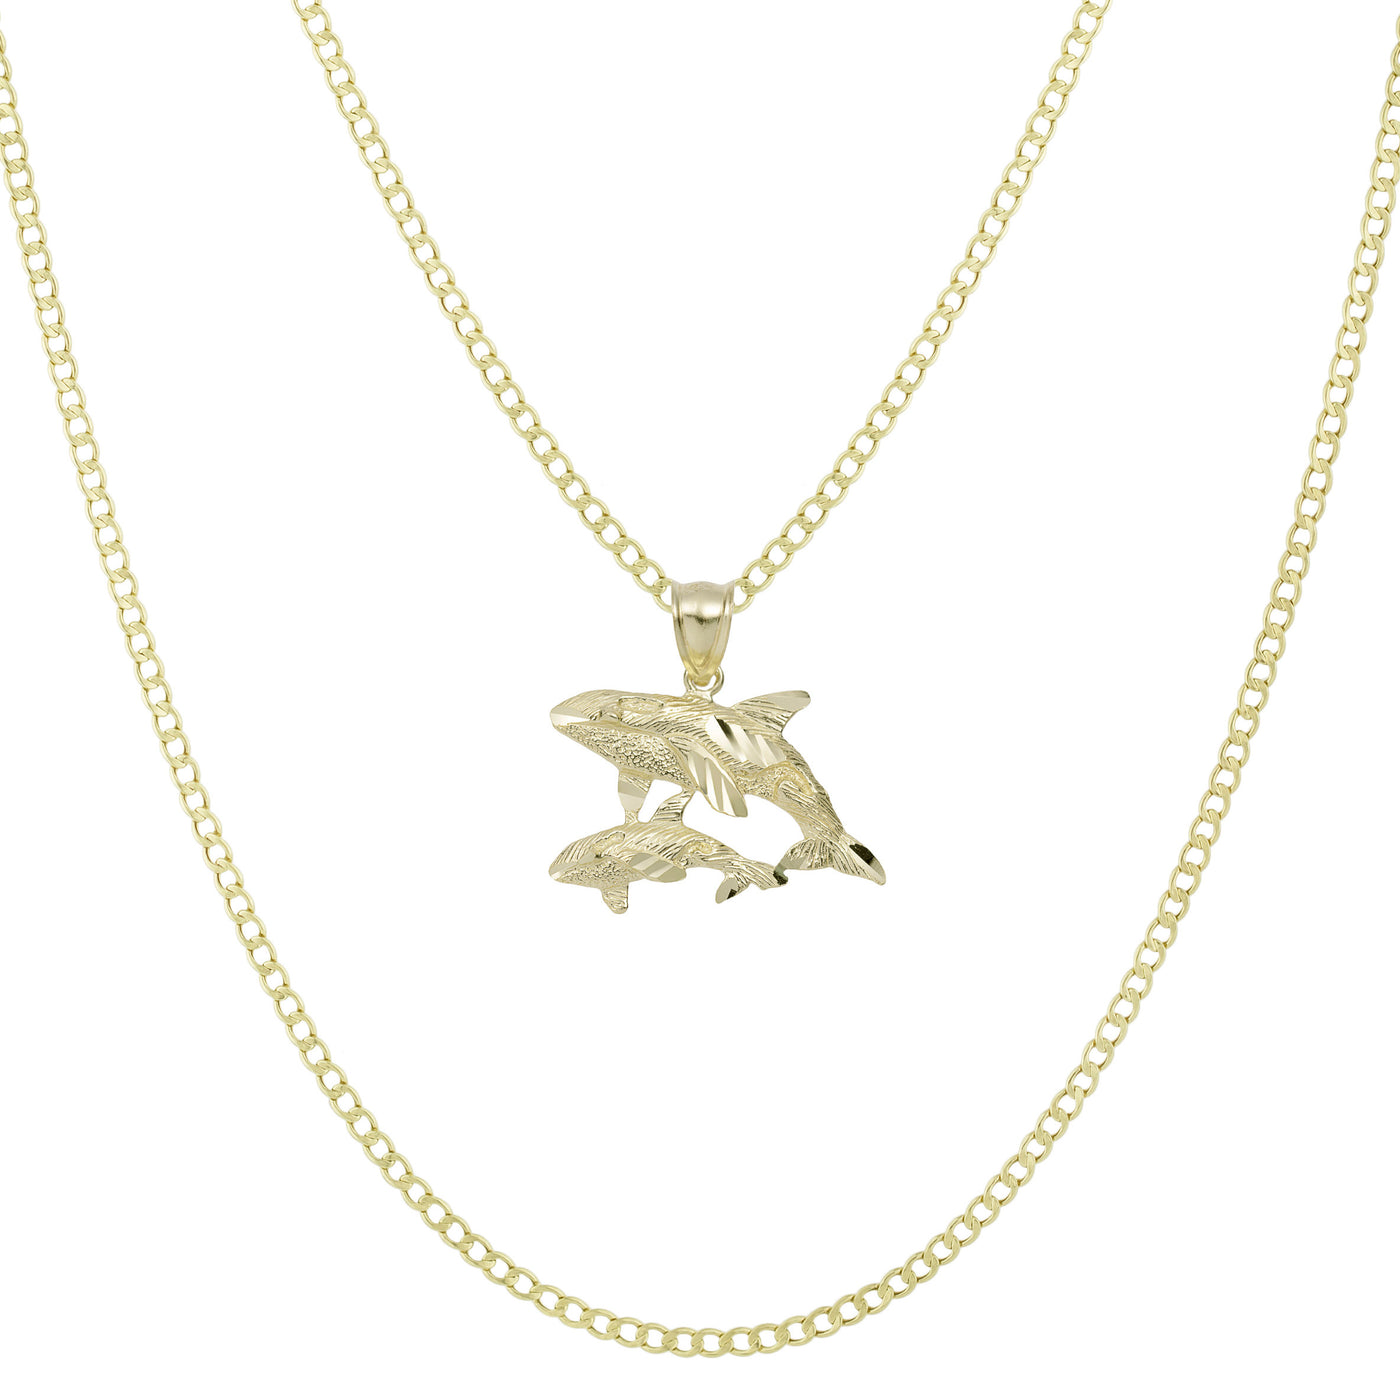 1" Diamond Cut Whale Pendant & Chain Necklace Set 10K Yellow Gold